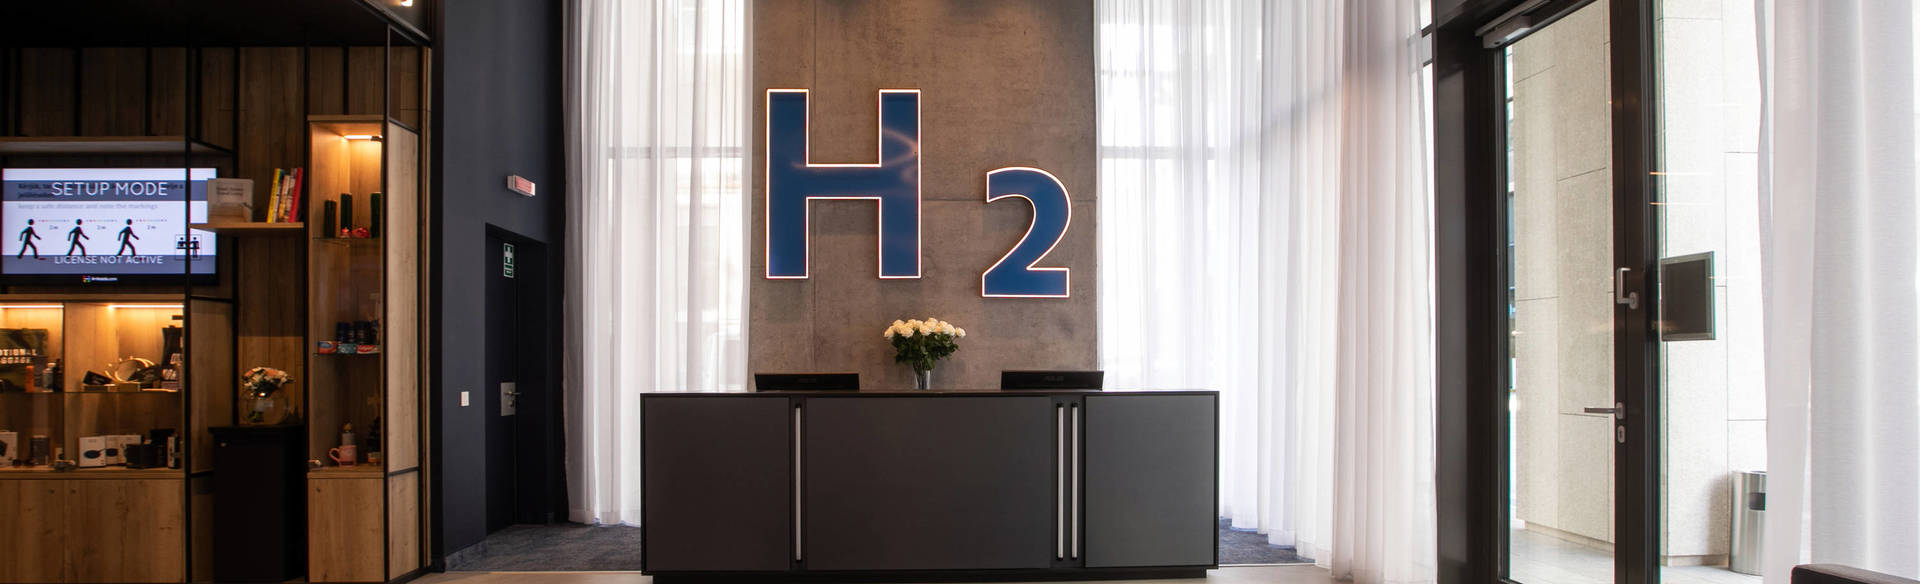 Recensione: H2 Hotel Budapest